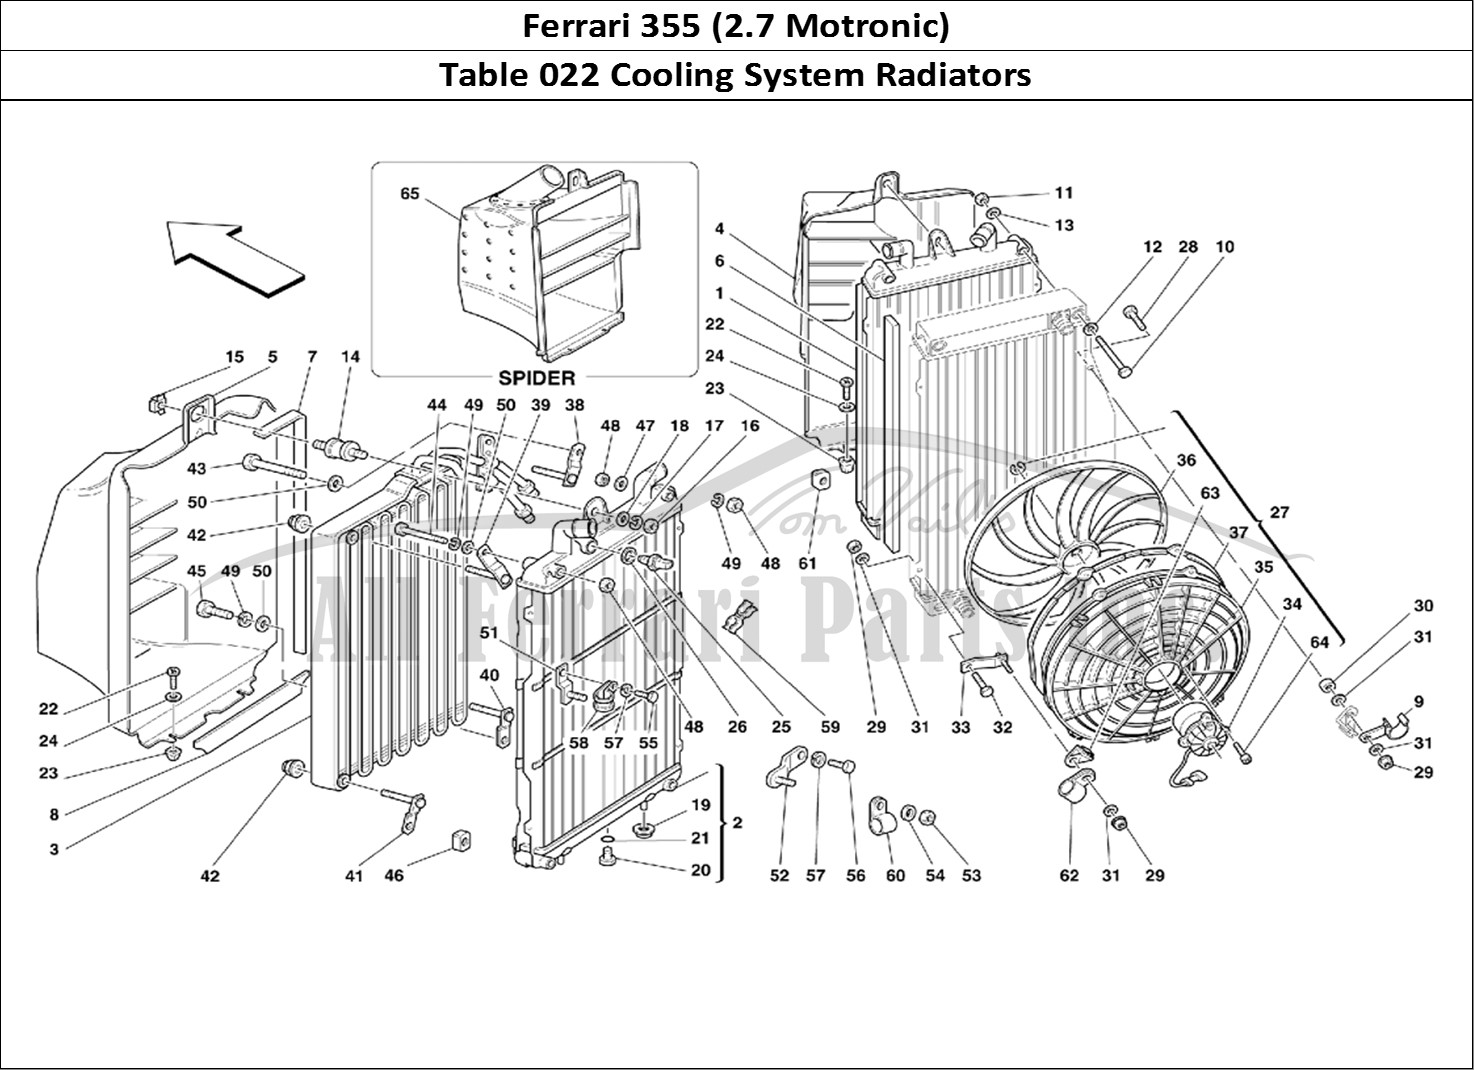 Ferrari Parts Ferrari 355 (2.7 Motronic) Page 022 Cooling System Radiators